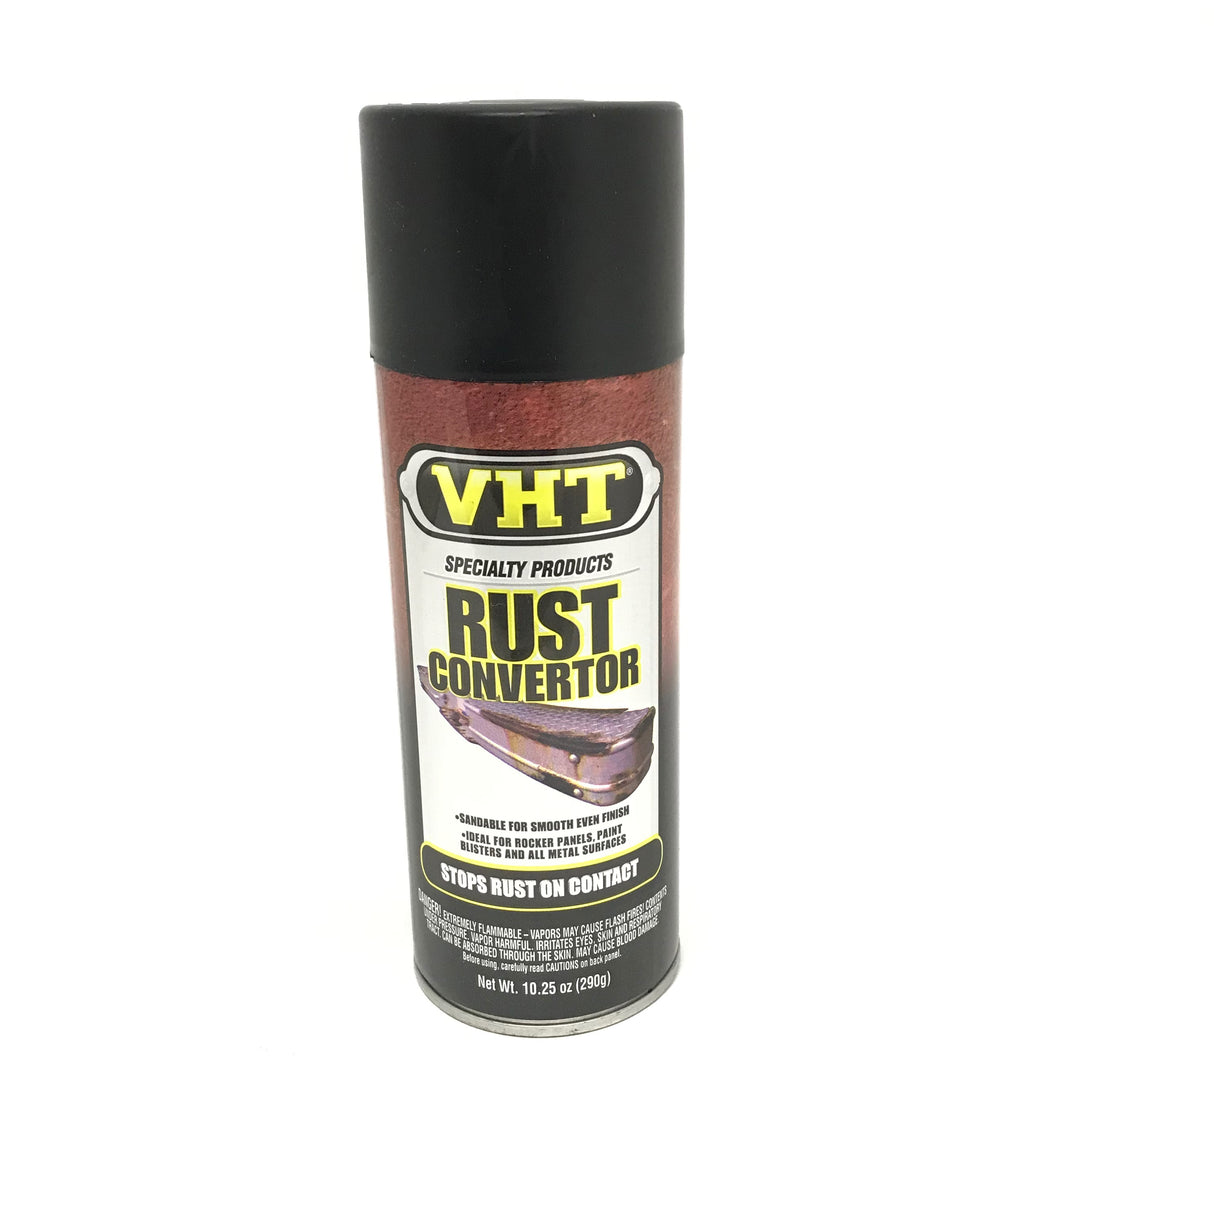 VHT SP229 Rust Converter - Stops Rust On Contact - 10.25 oz Aerosol Duplicolor